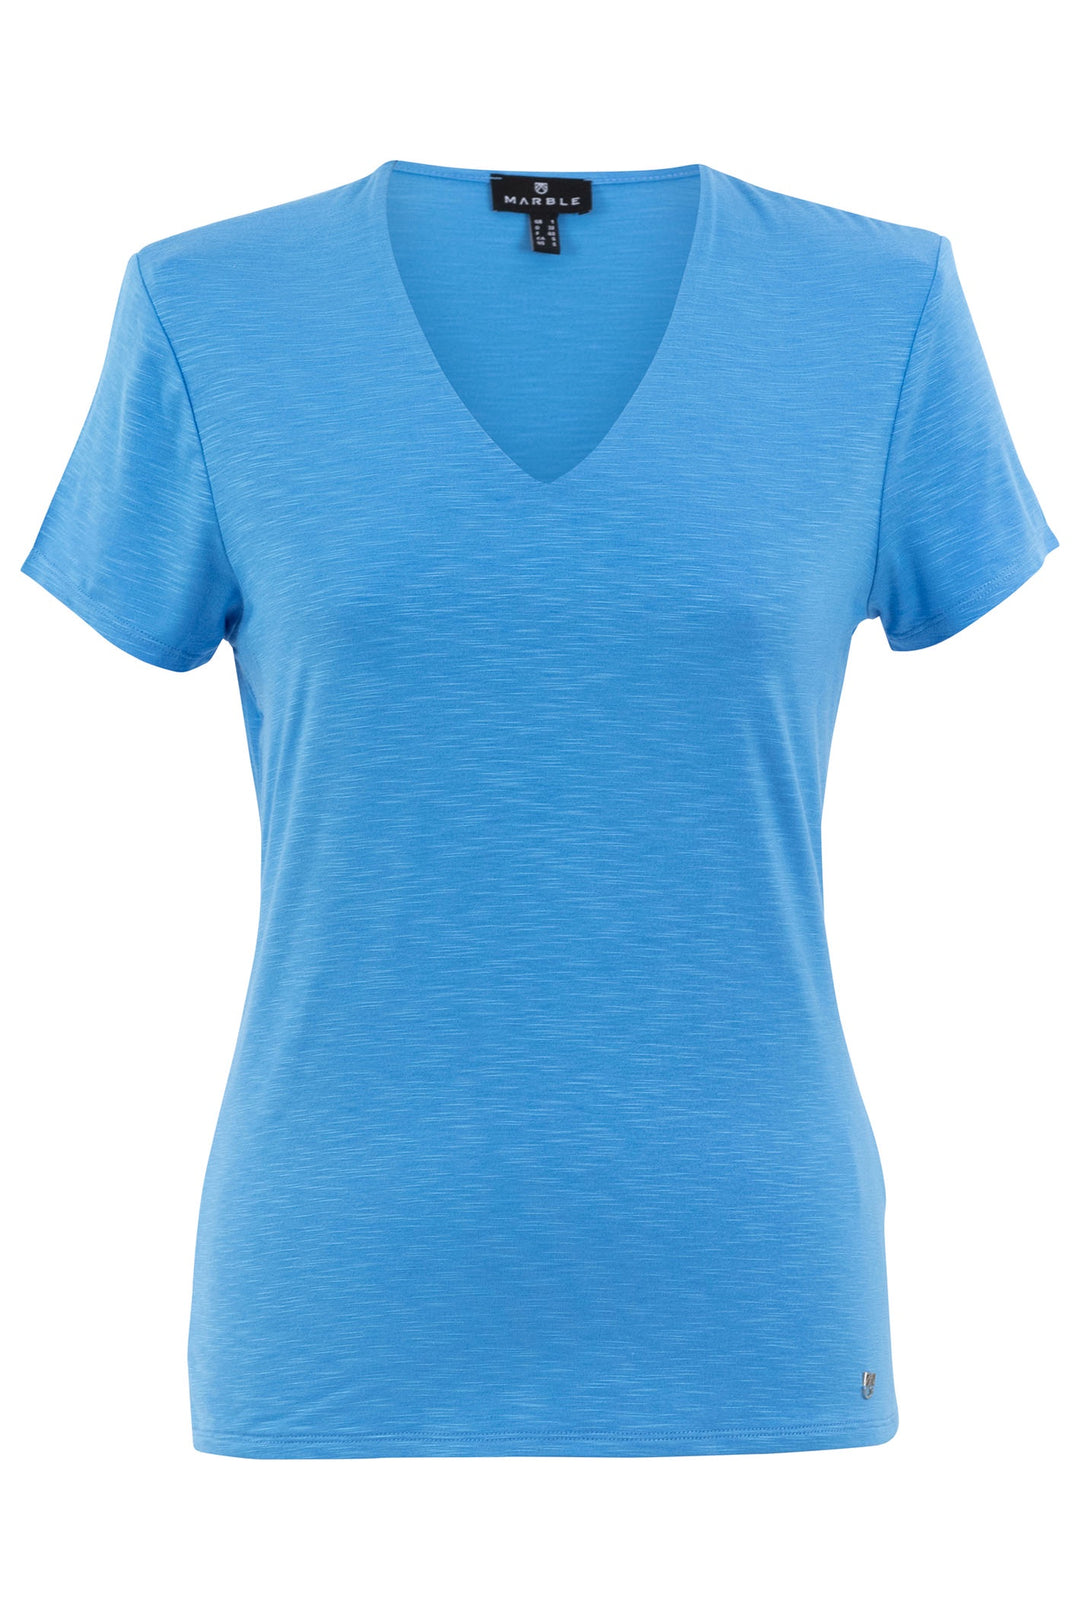 Marble 6539 213 Blue V-Neck T-Shirt Top